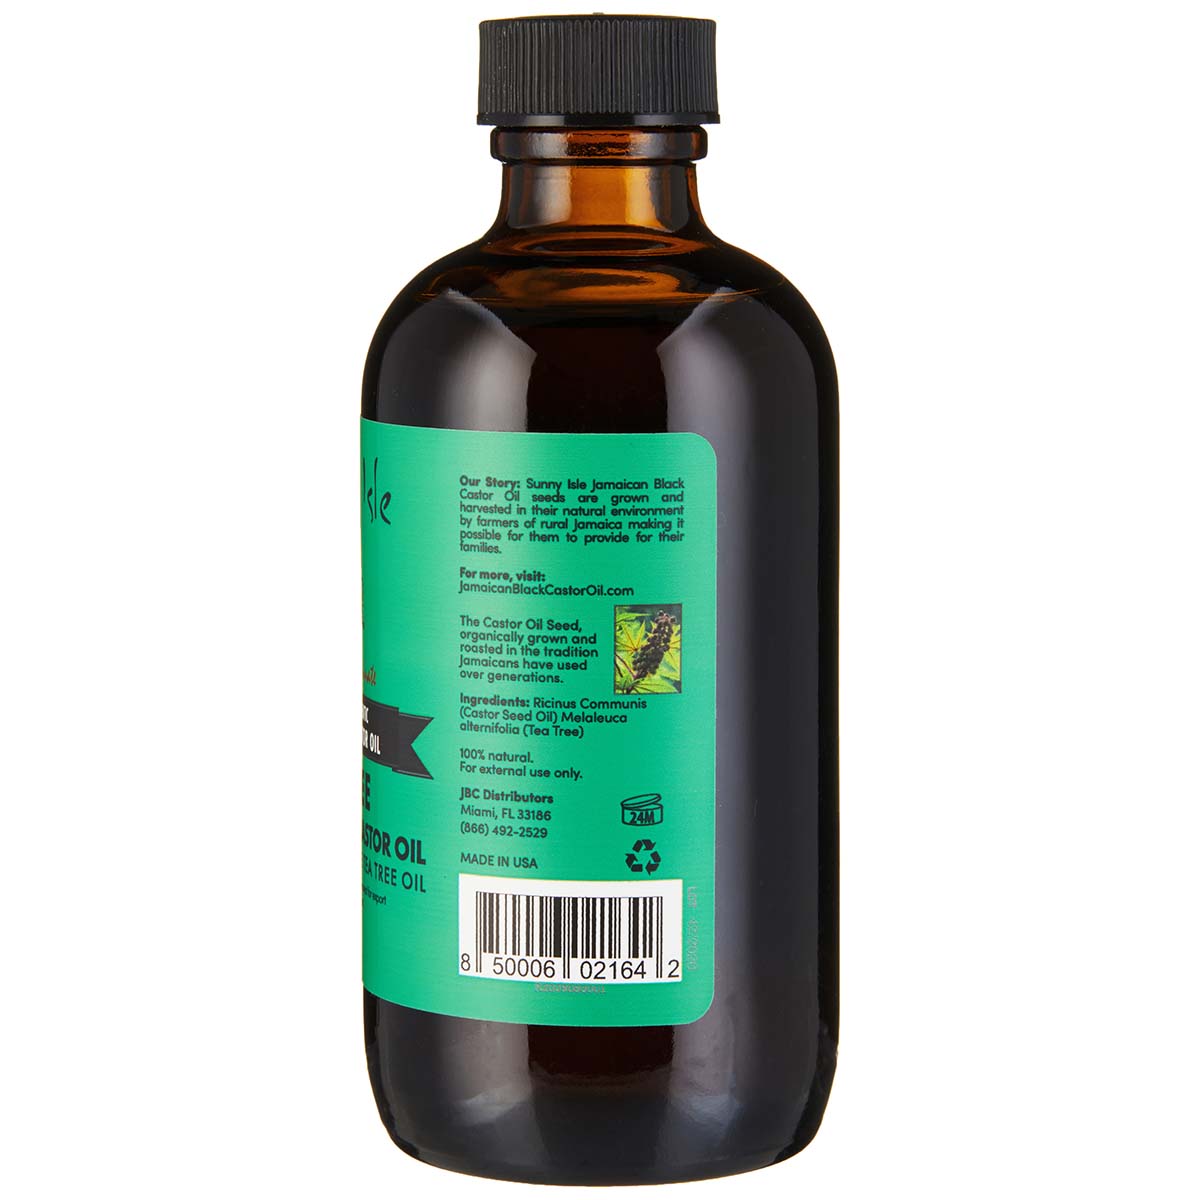 Jamaican Black Castor Oil – Tea Tree - Jamaican Mango & Lime